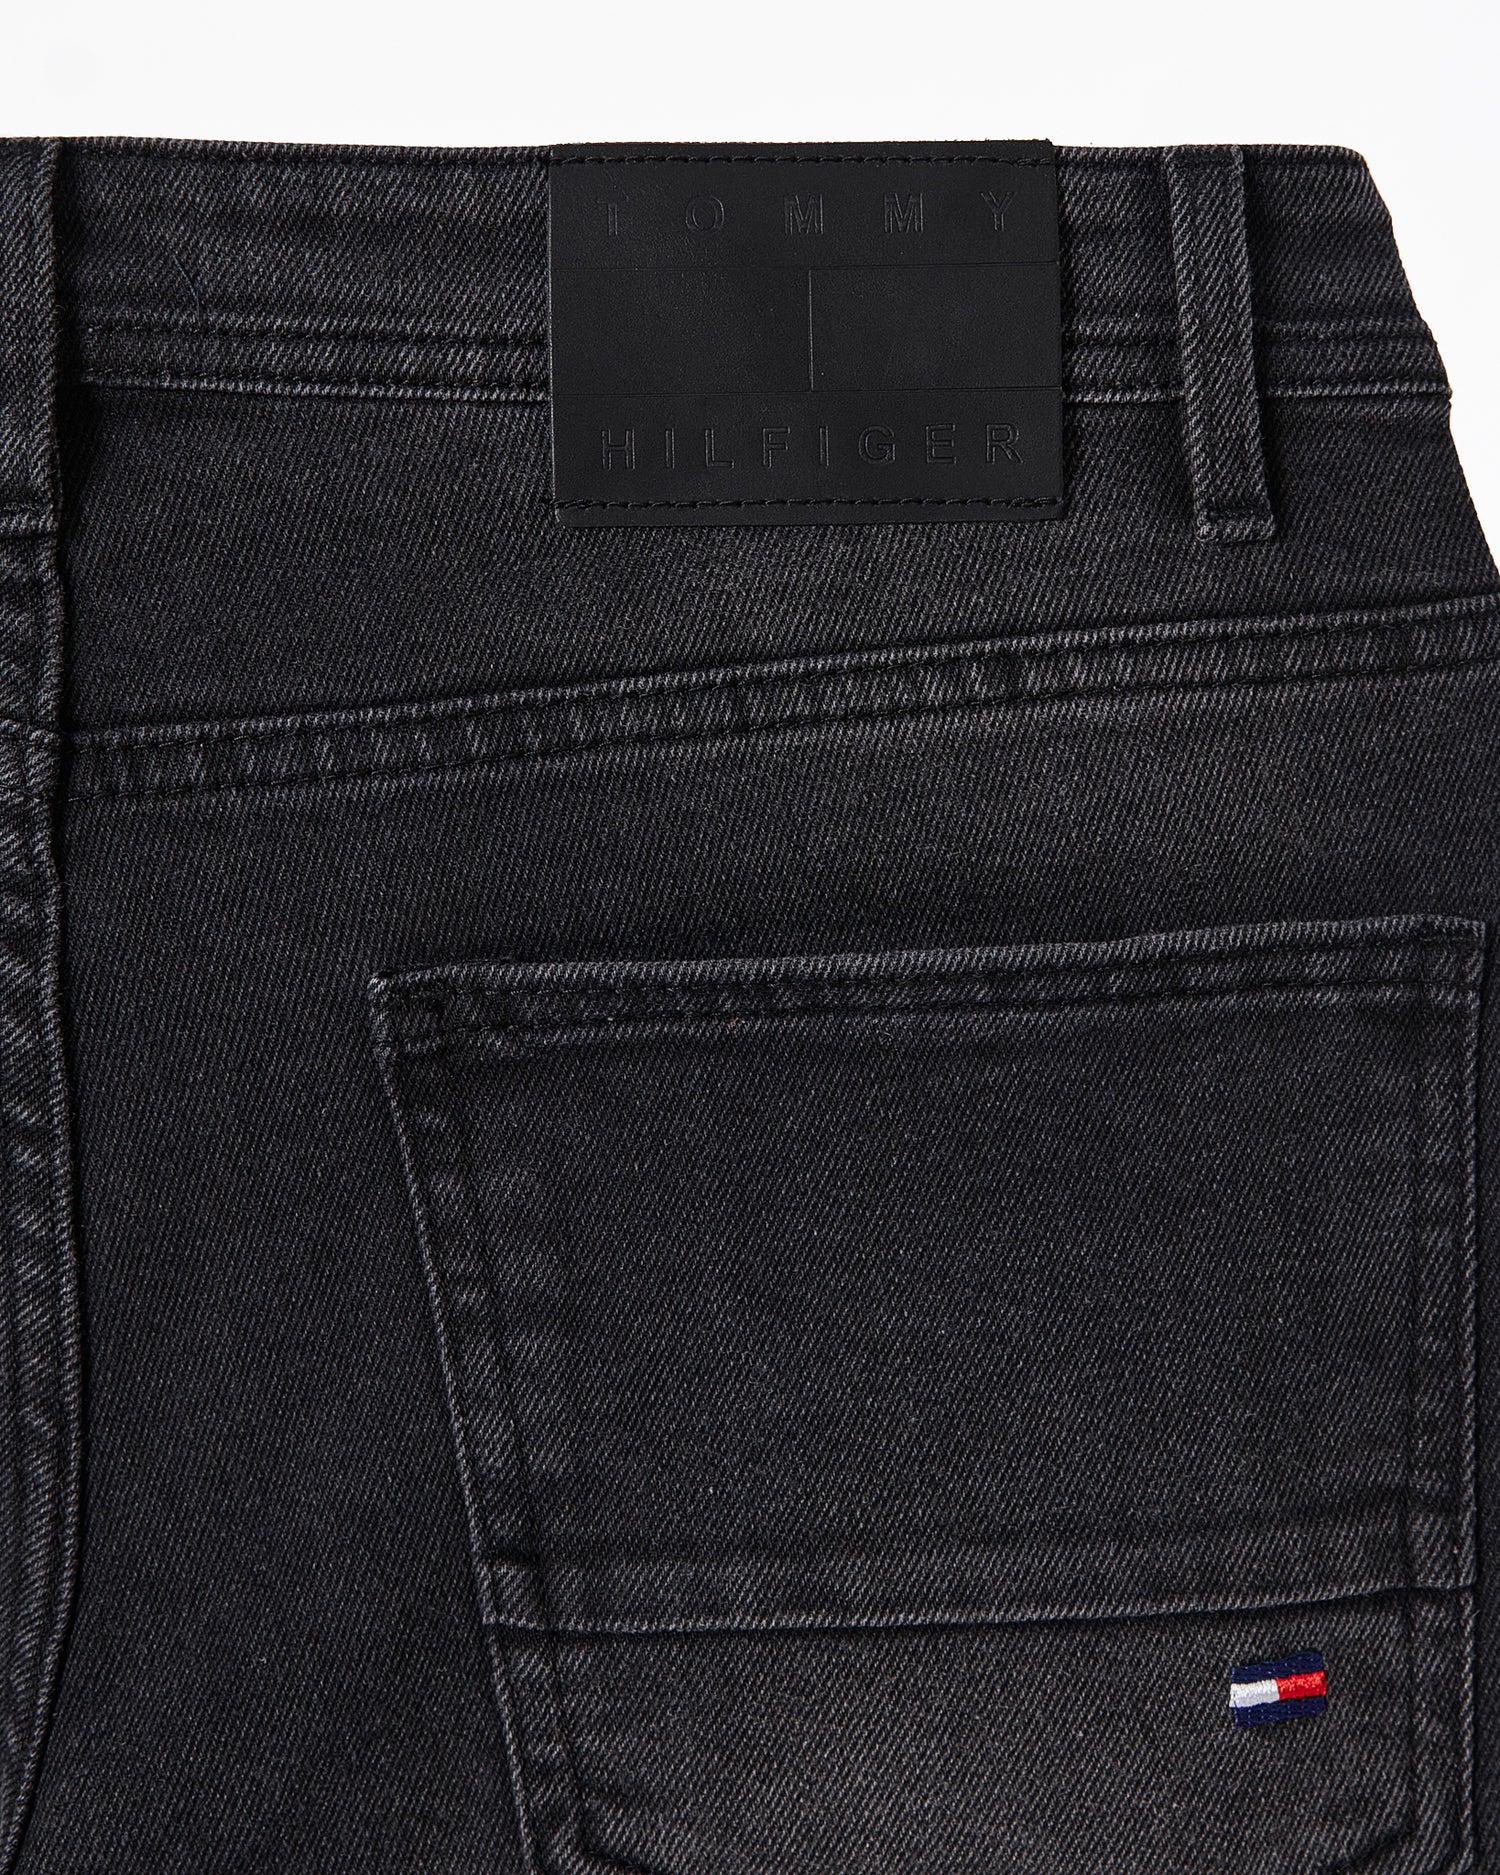 TH Flag Embroidered Men Dark Grey Slim Fit Jeans 25.90